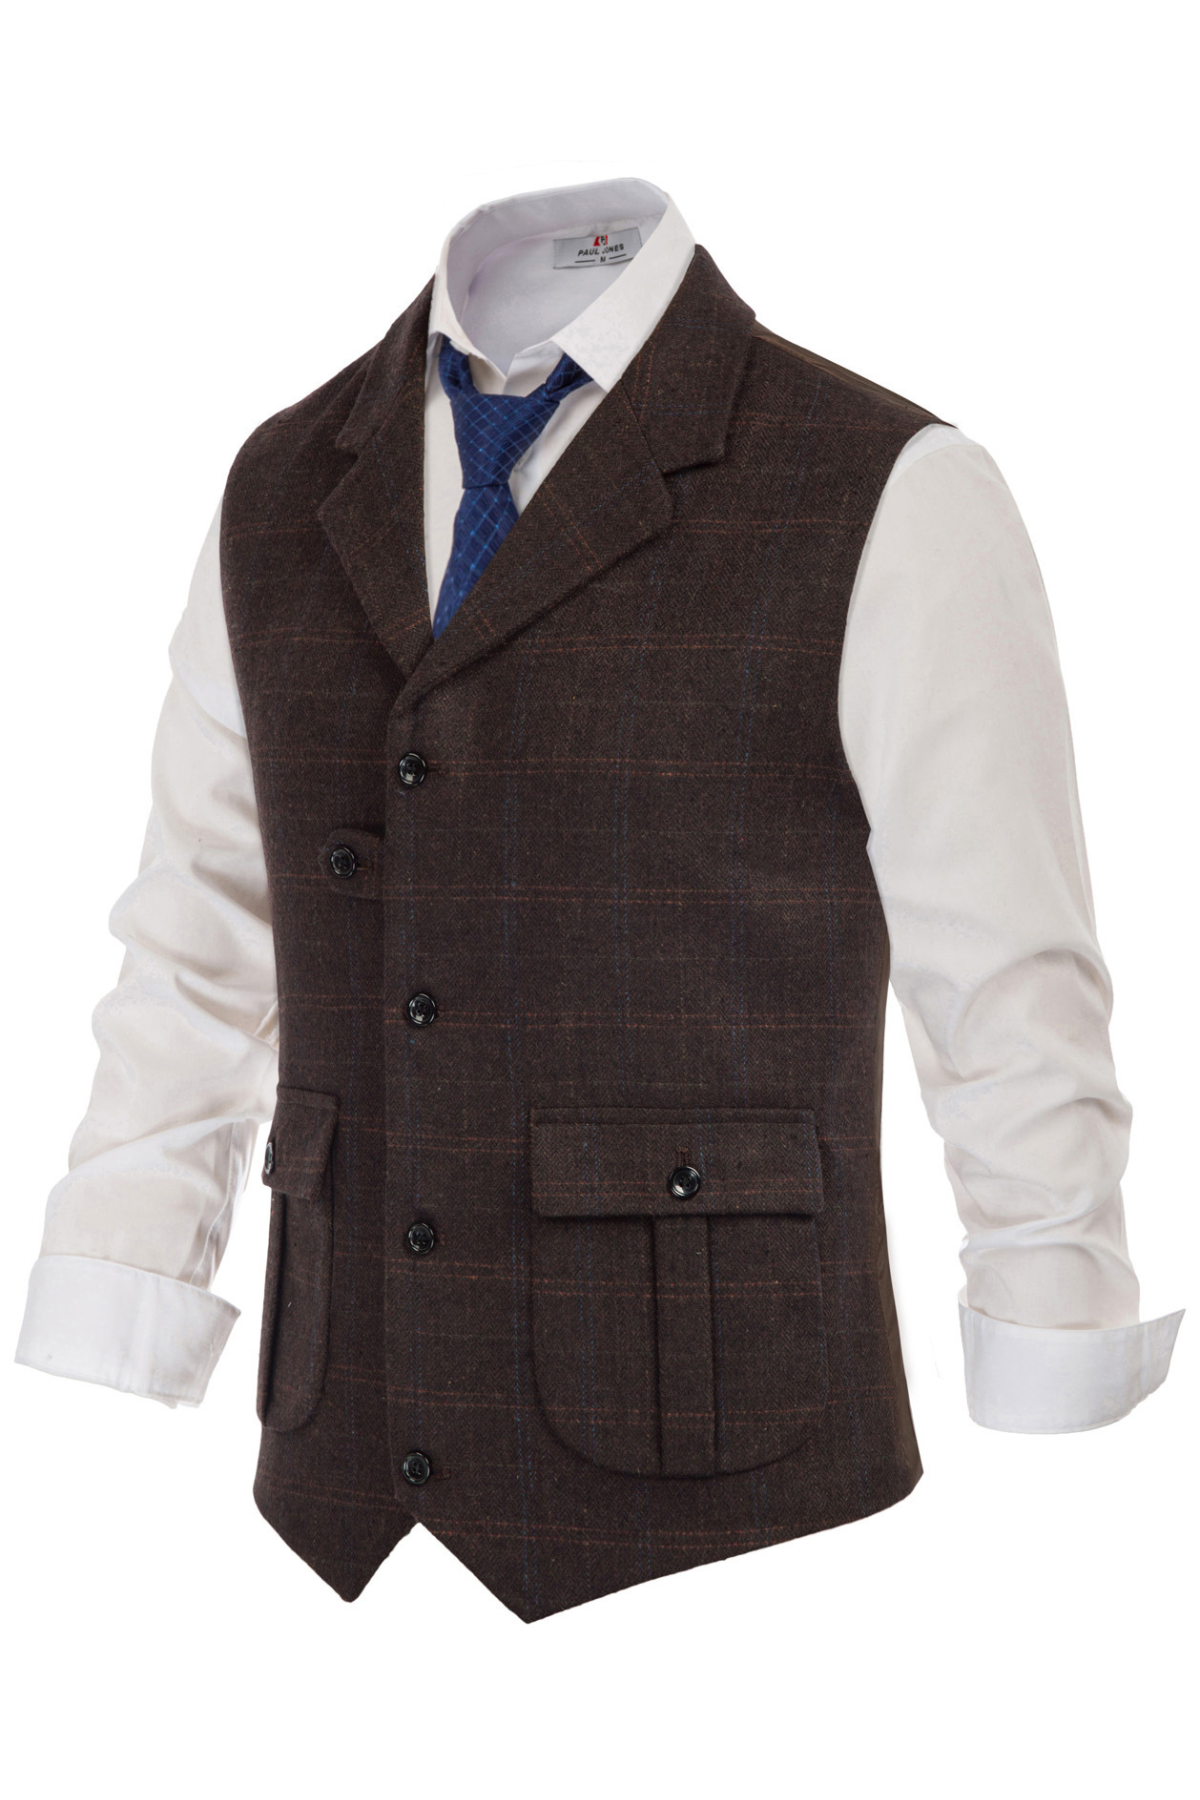 Men's Casual Shirt Vest Waistcoat Notch Lapel With Pockets | PJ Paul ...